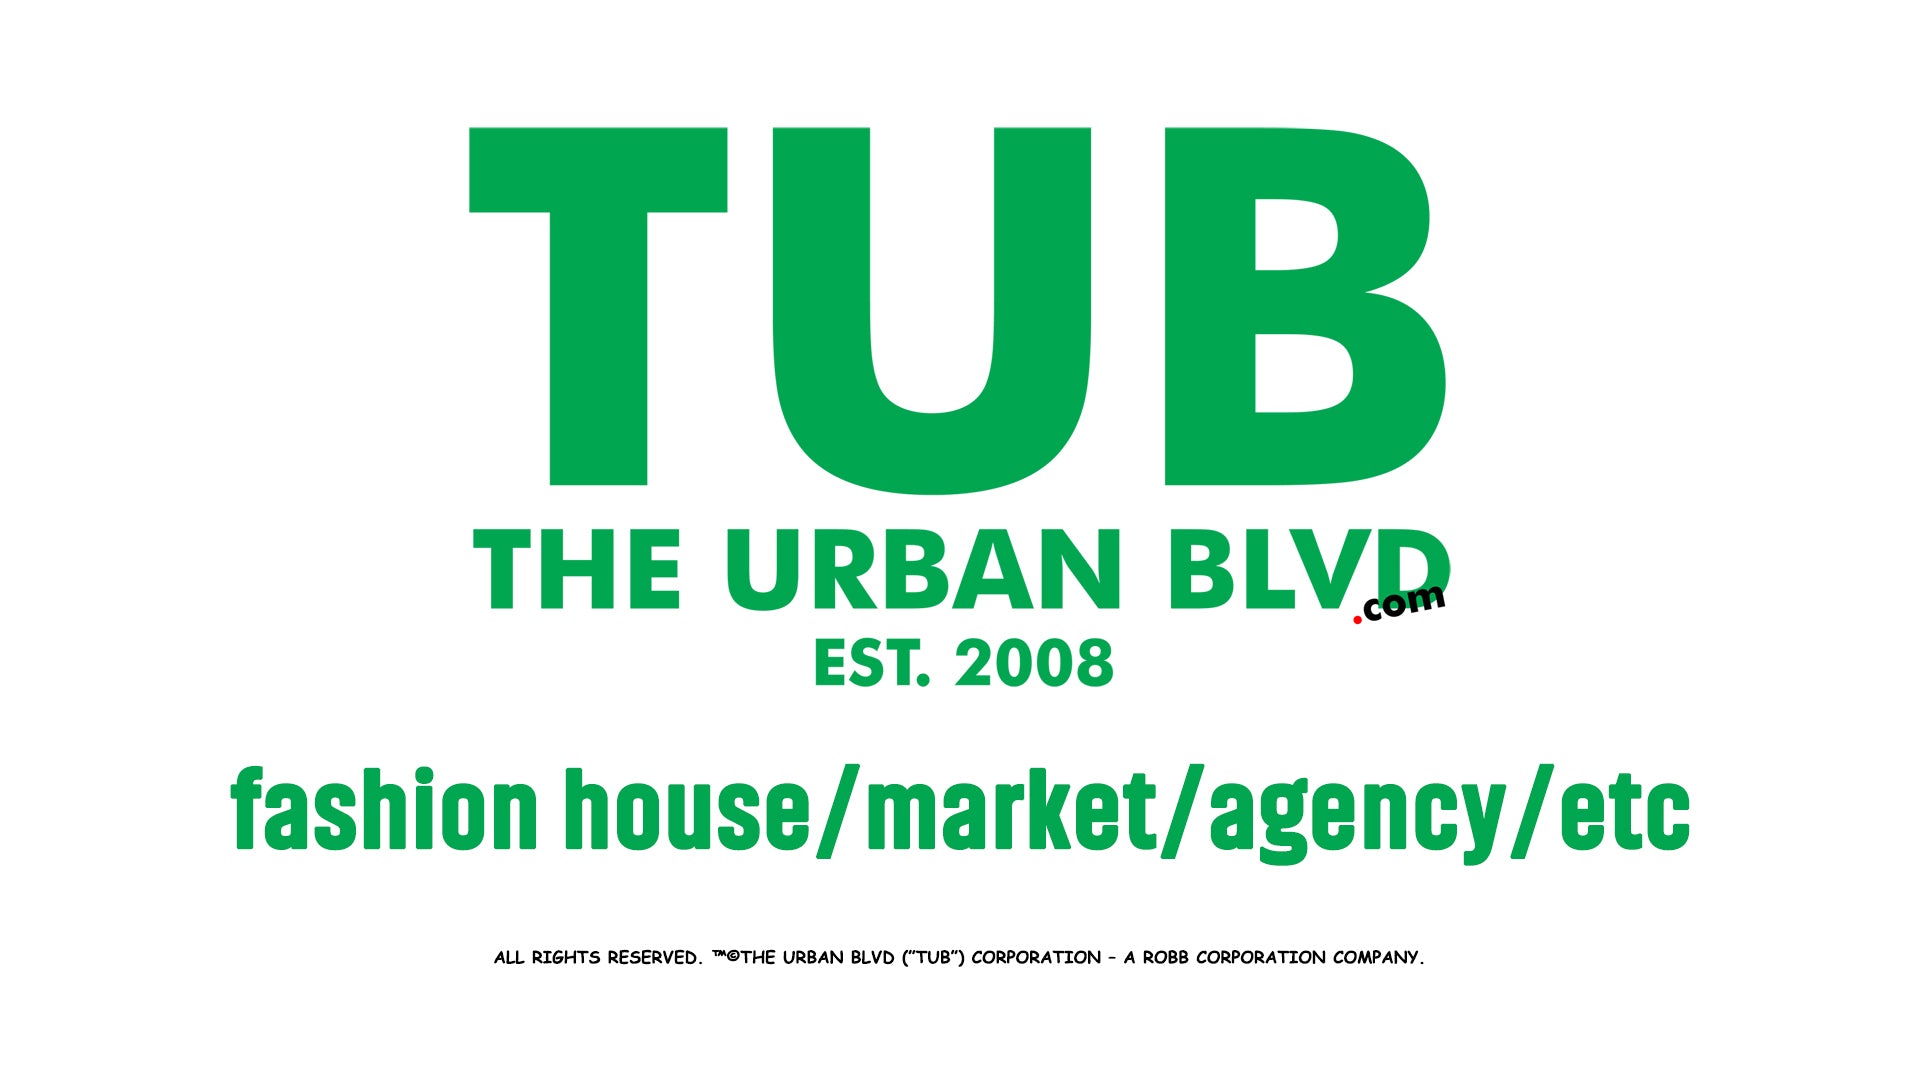 Load video: The Urban Blvd Television